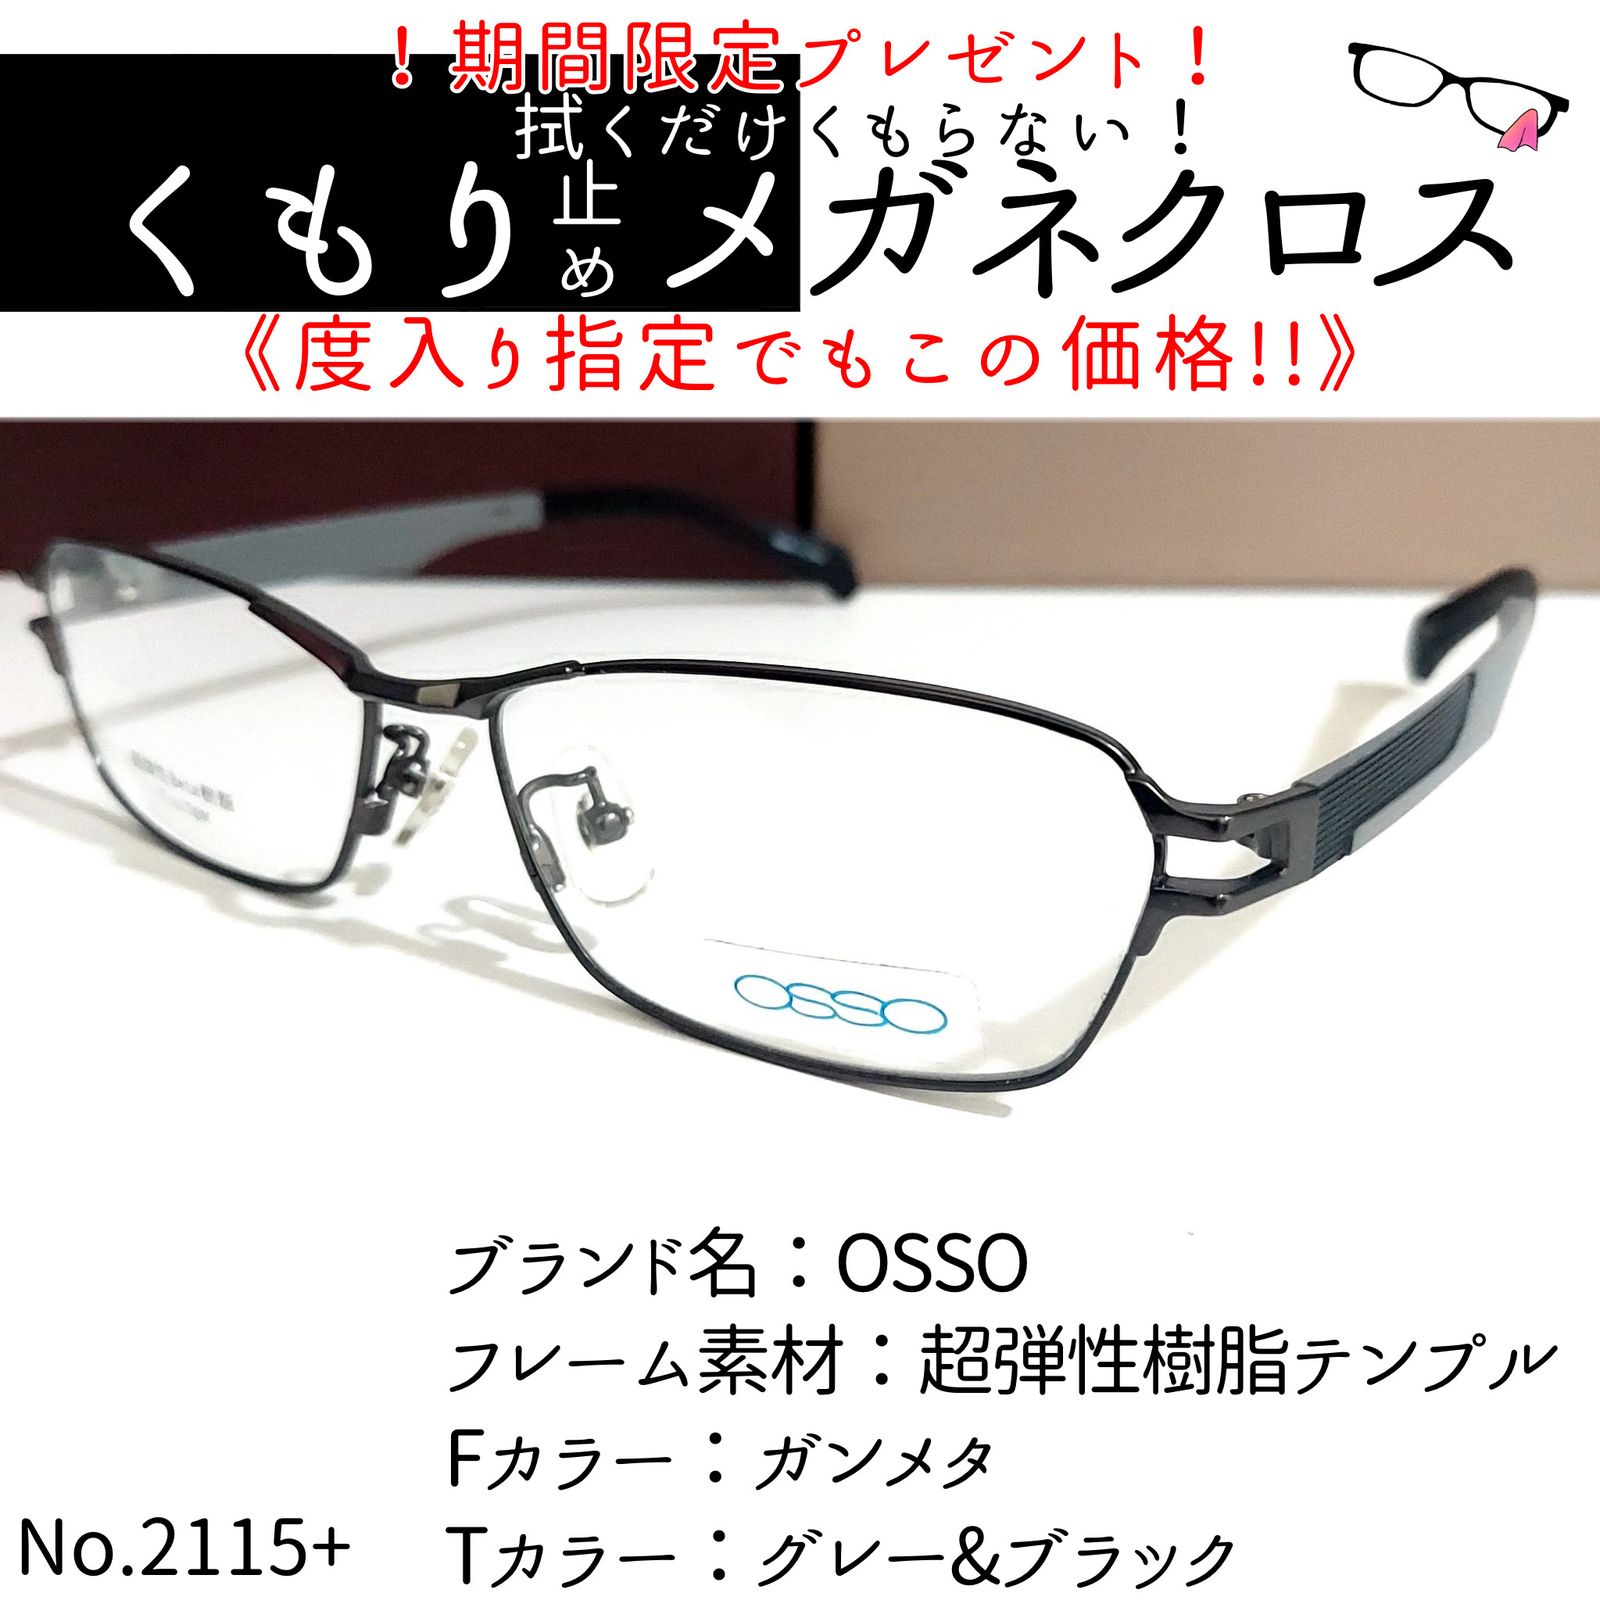 No.2115+メガネ OSSO【度数入り込み価格】 - スッキリ生活専門店